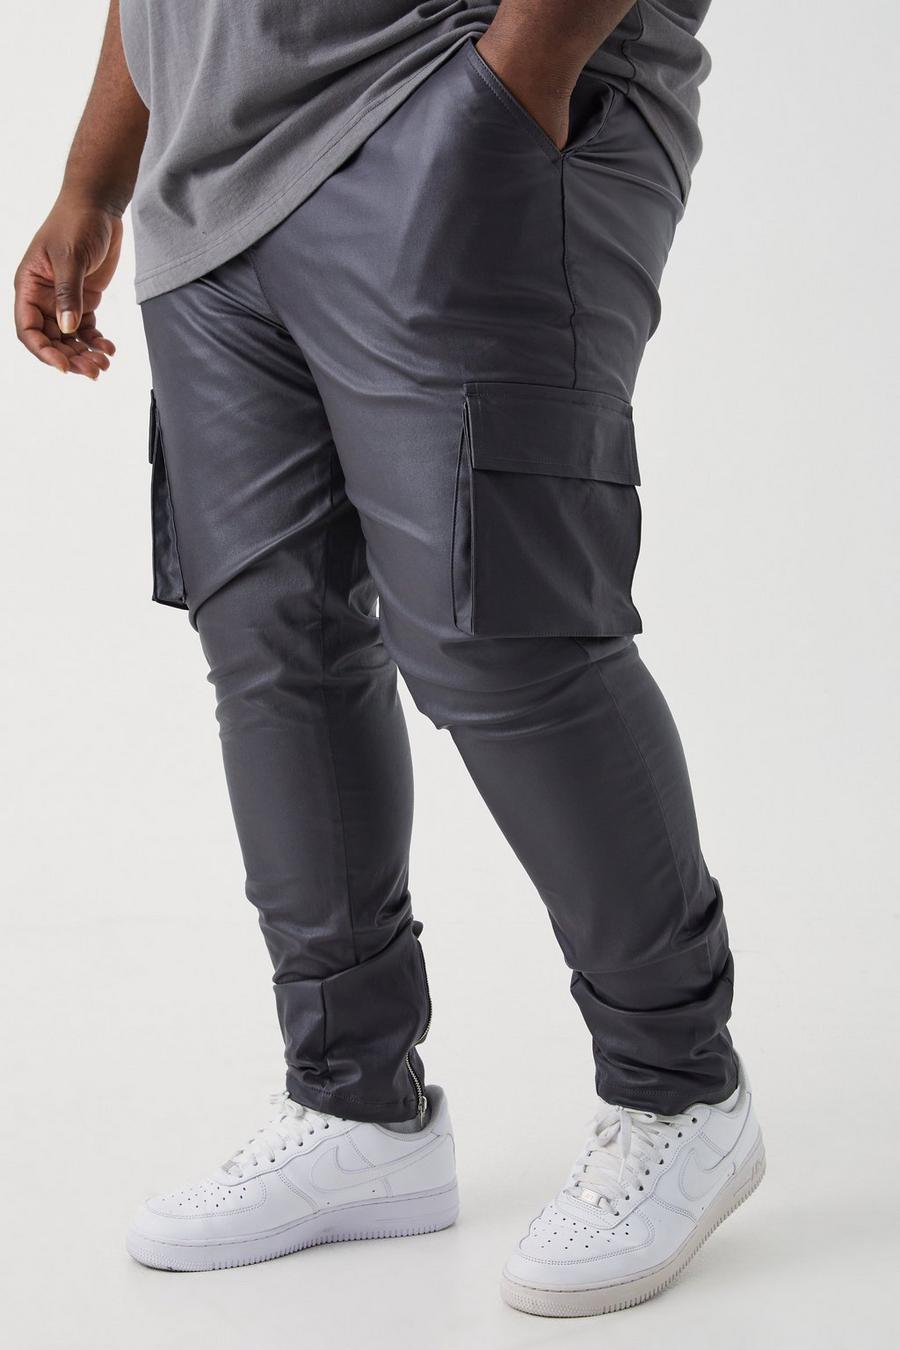 Grande taille - Pantalon cargo skinny, Charcoal